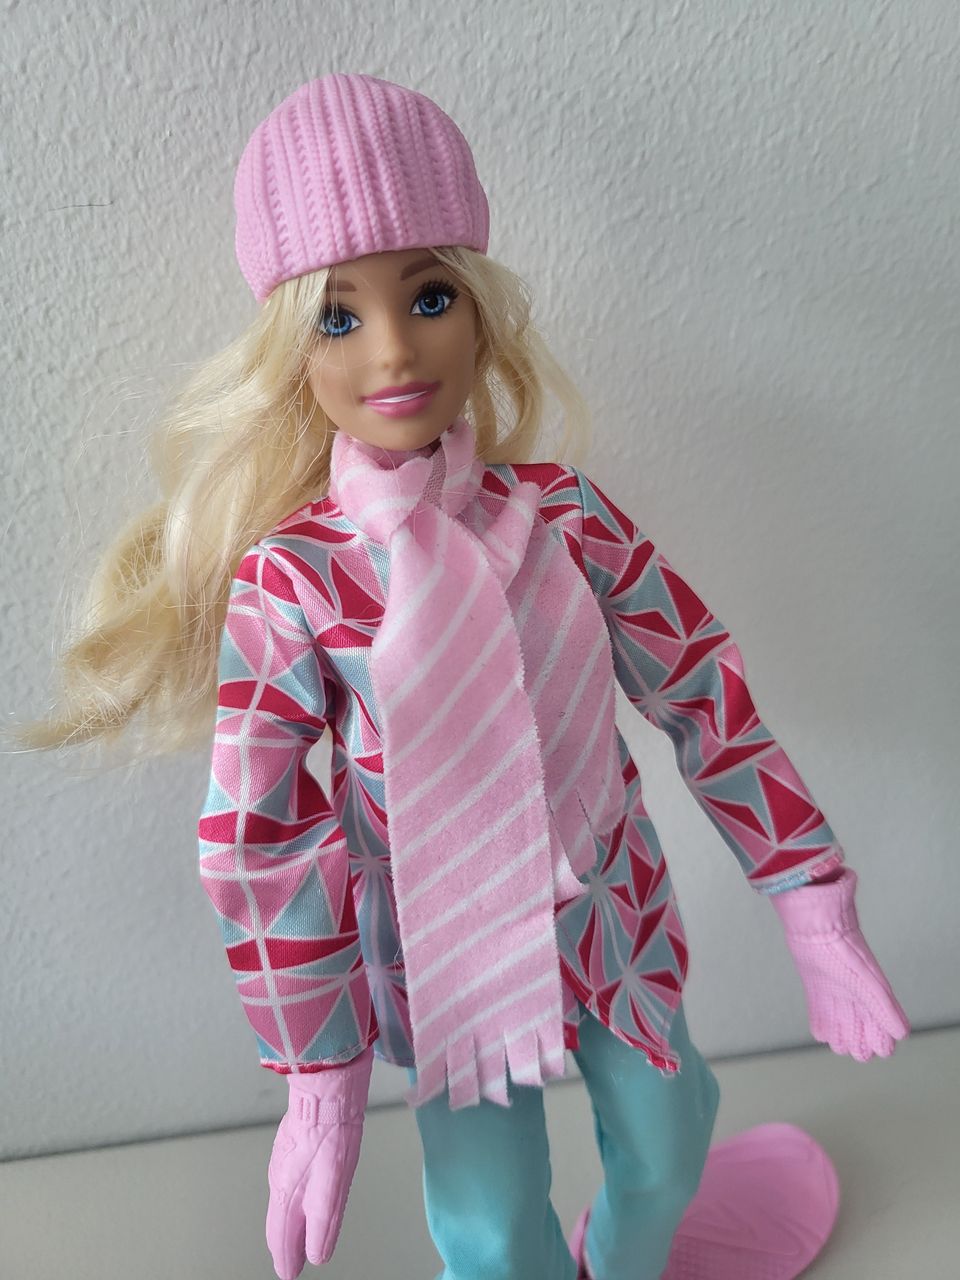 Barbie, talviurheilija